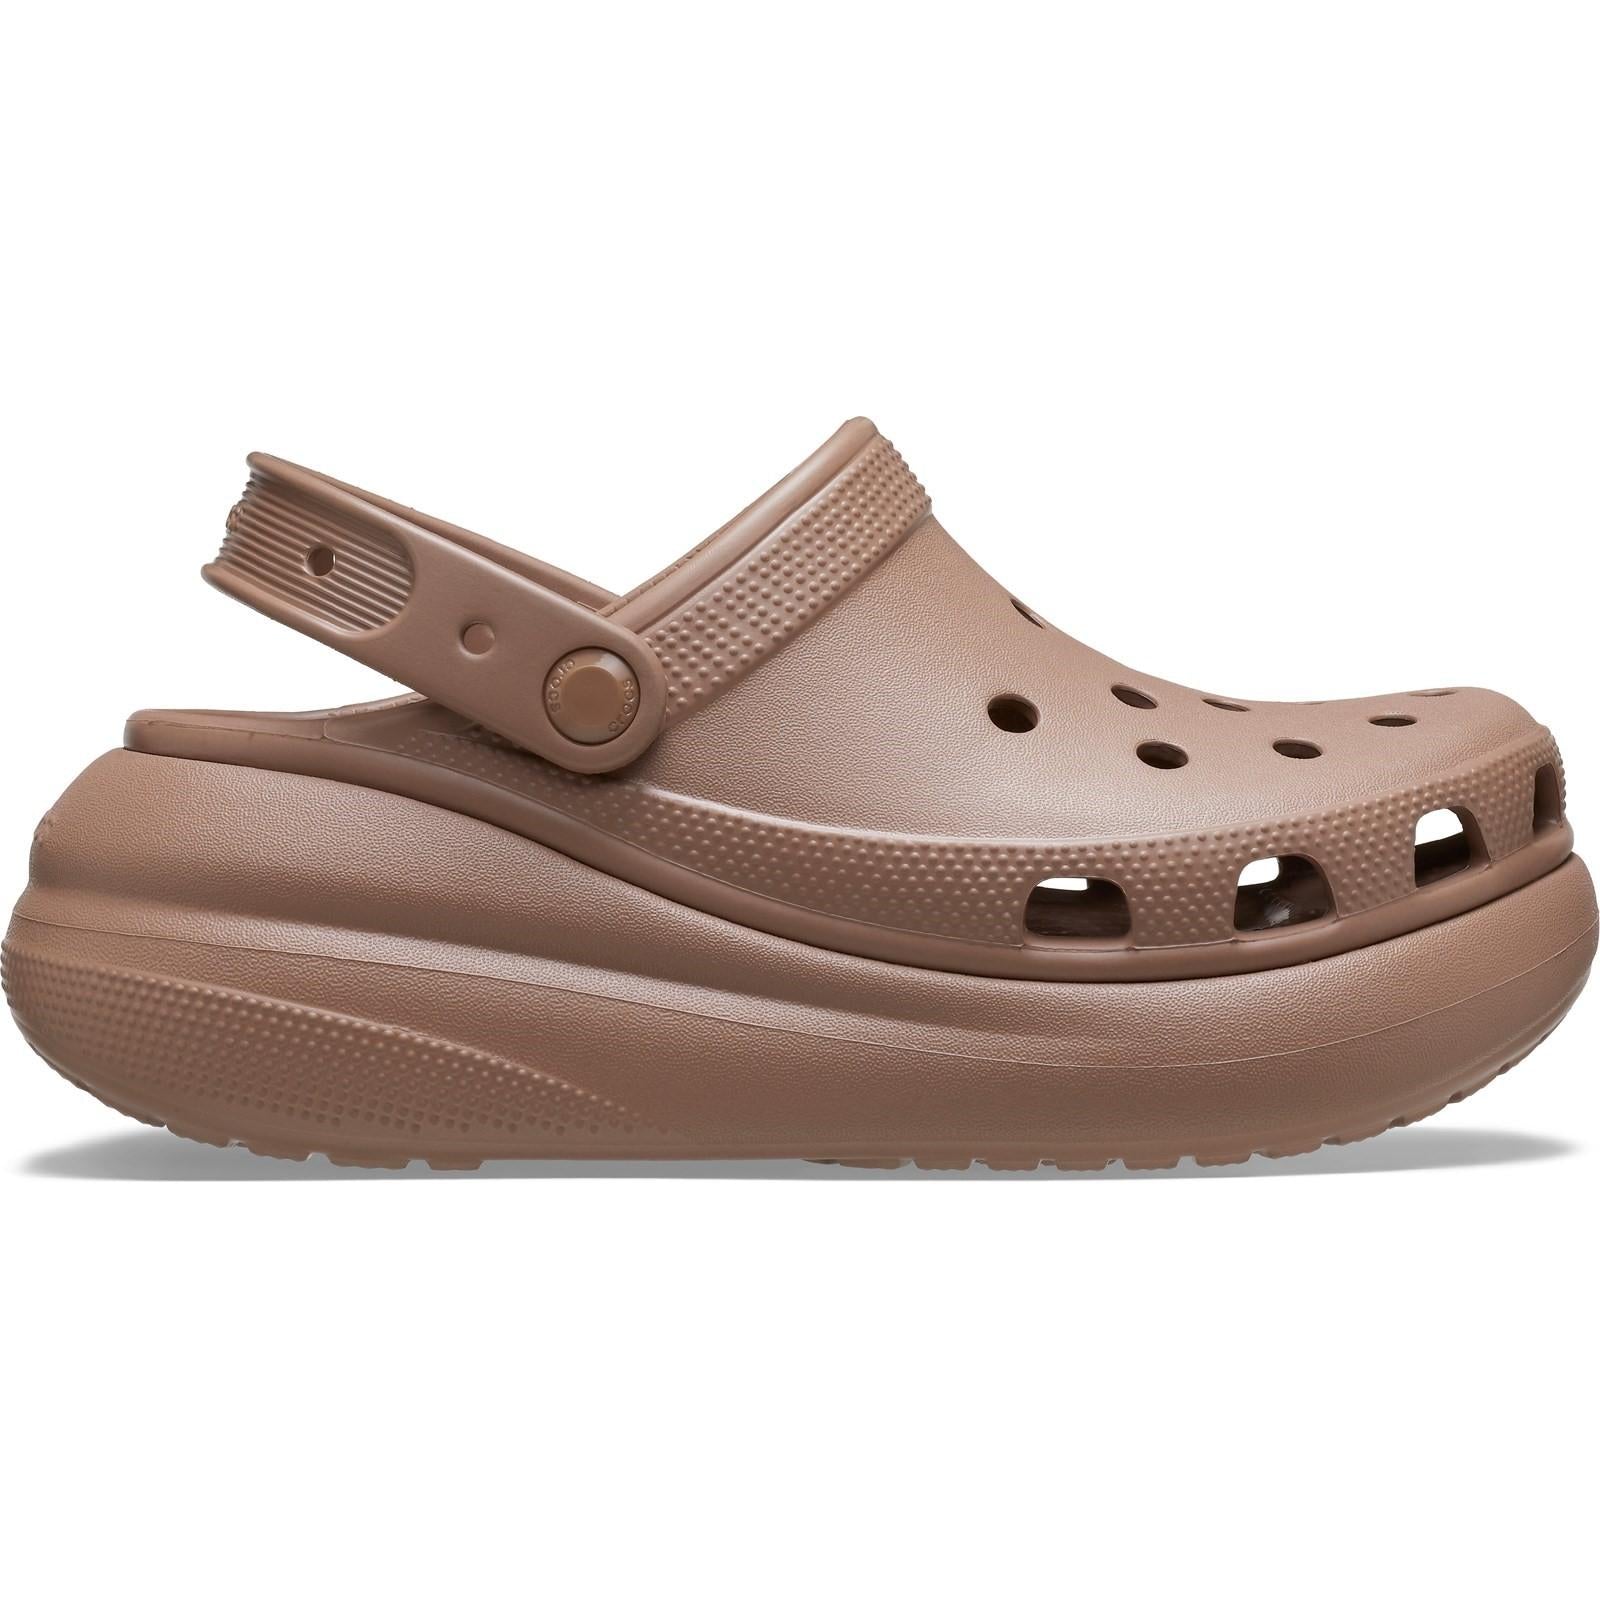 Crocs Classic Crush Clog Sandals